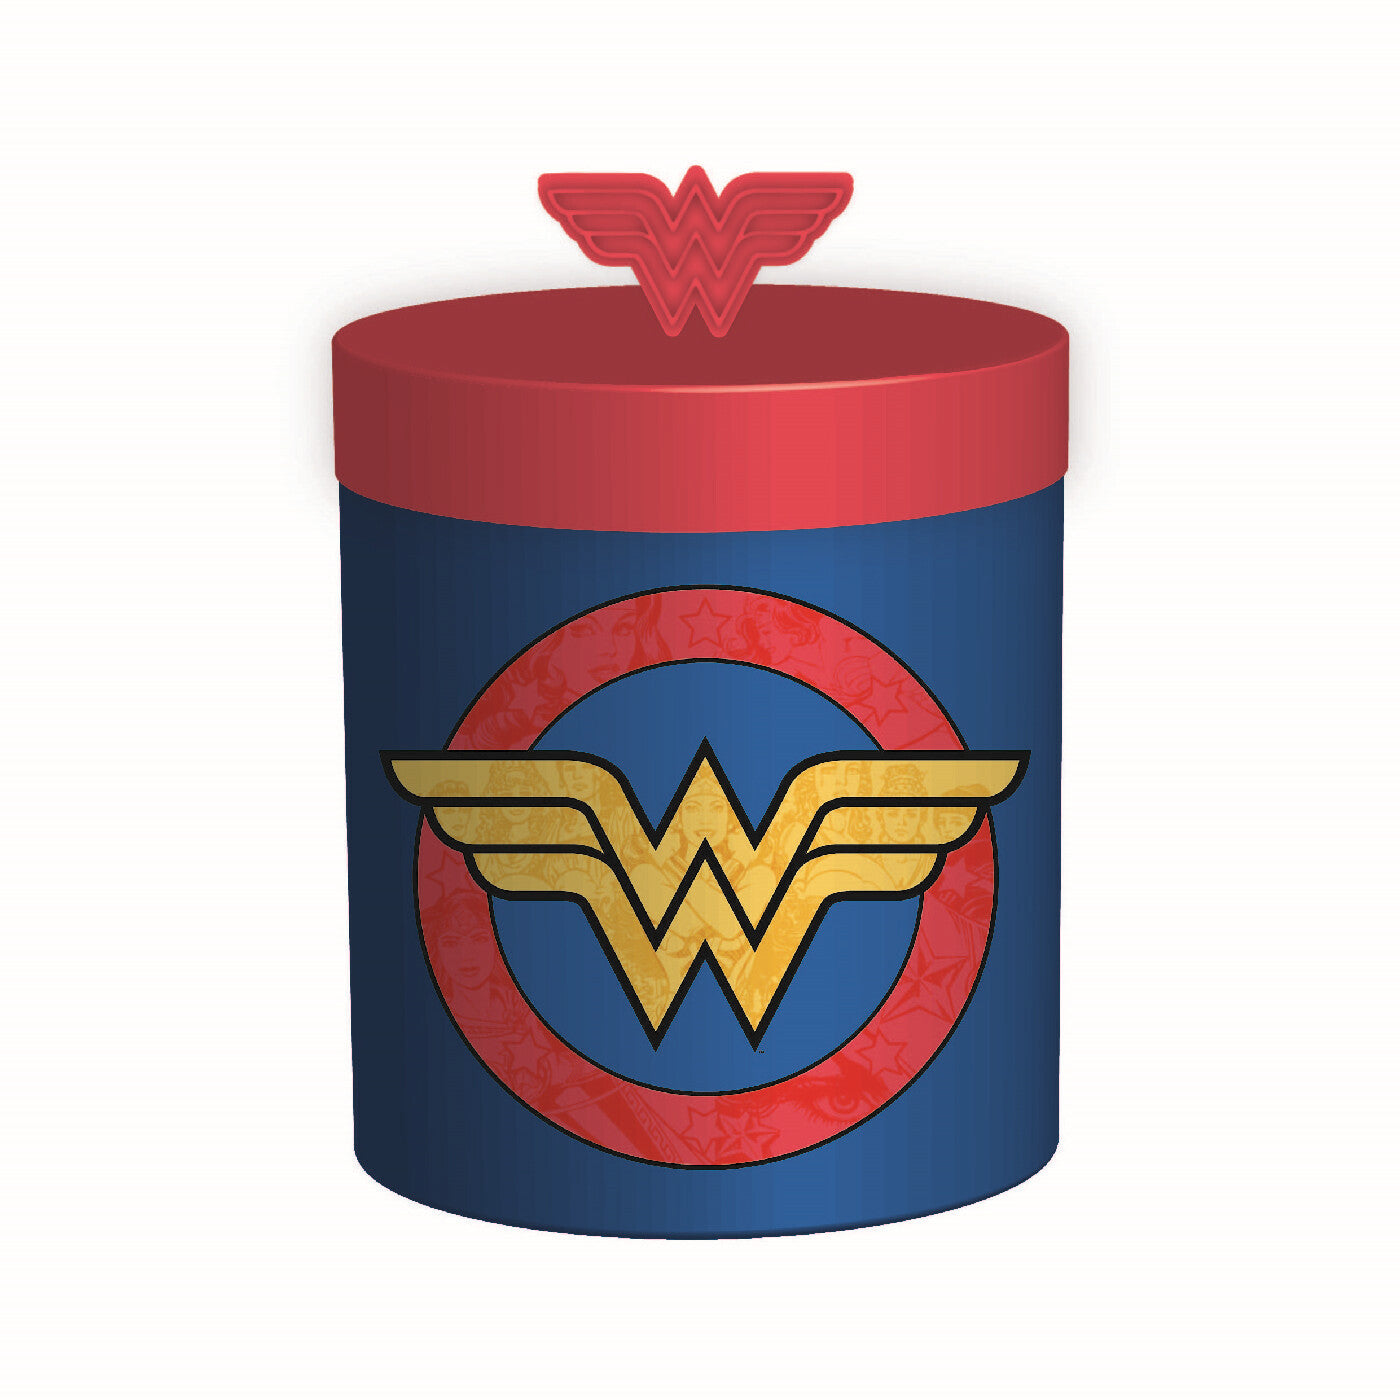  DC Comics: Wonder Woman Ceramic Cookie Jar  5055453488245